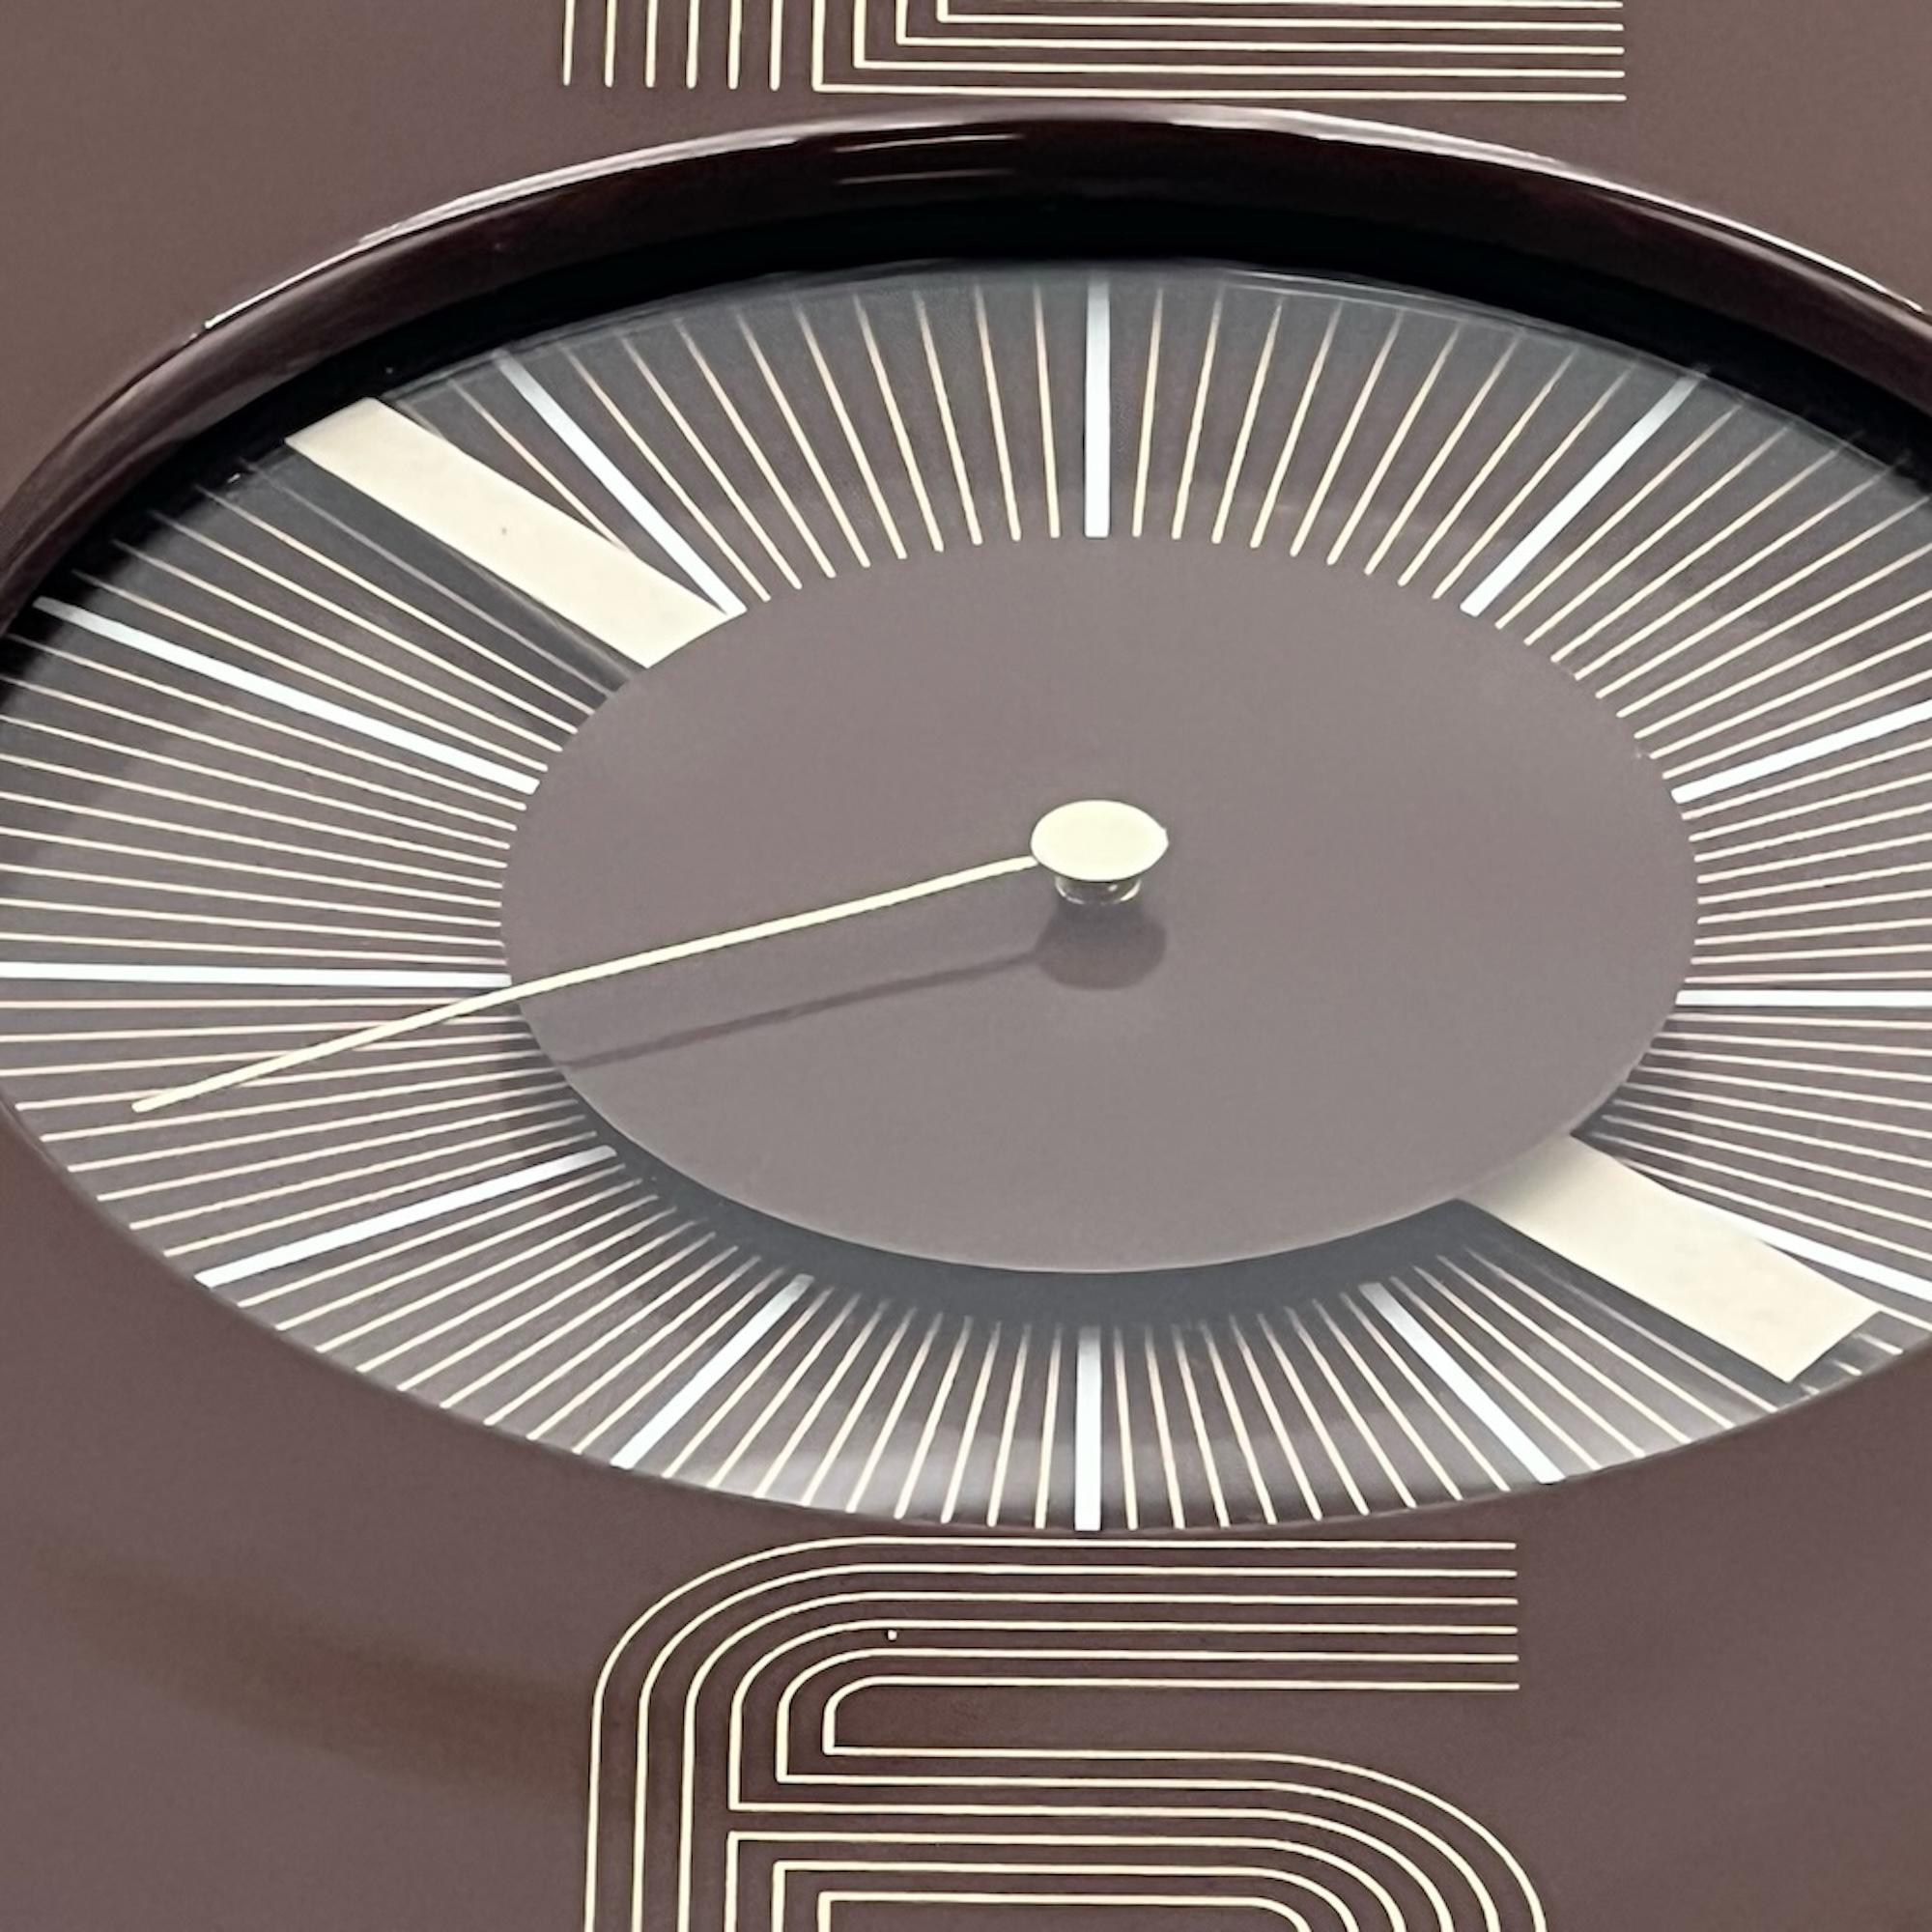 Vintage Kienzle Space Age Clock: 1970s West German Design Marvel in Glossy Brown For Sale 1